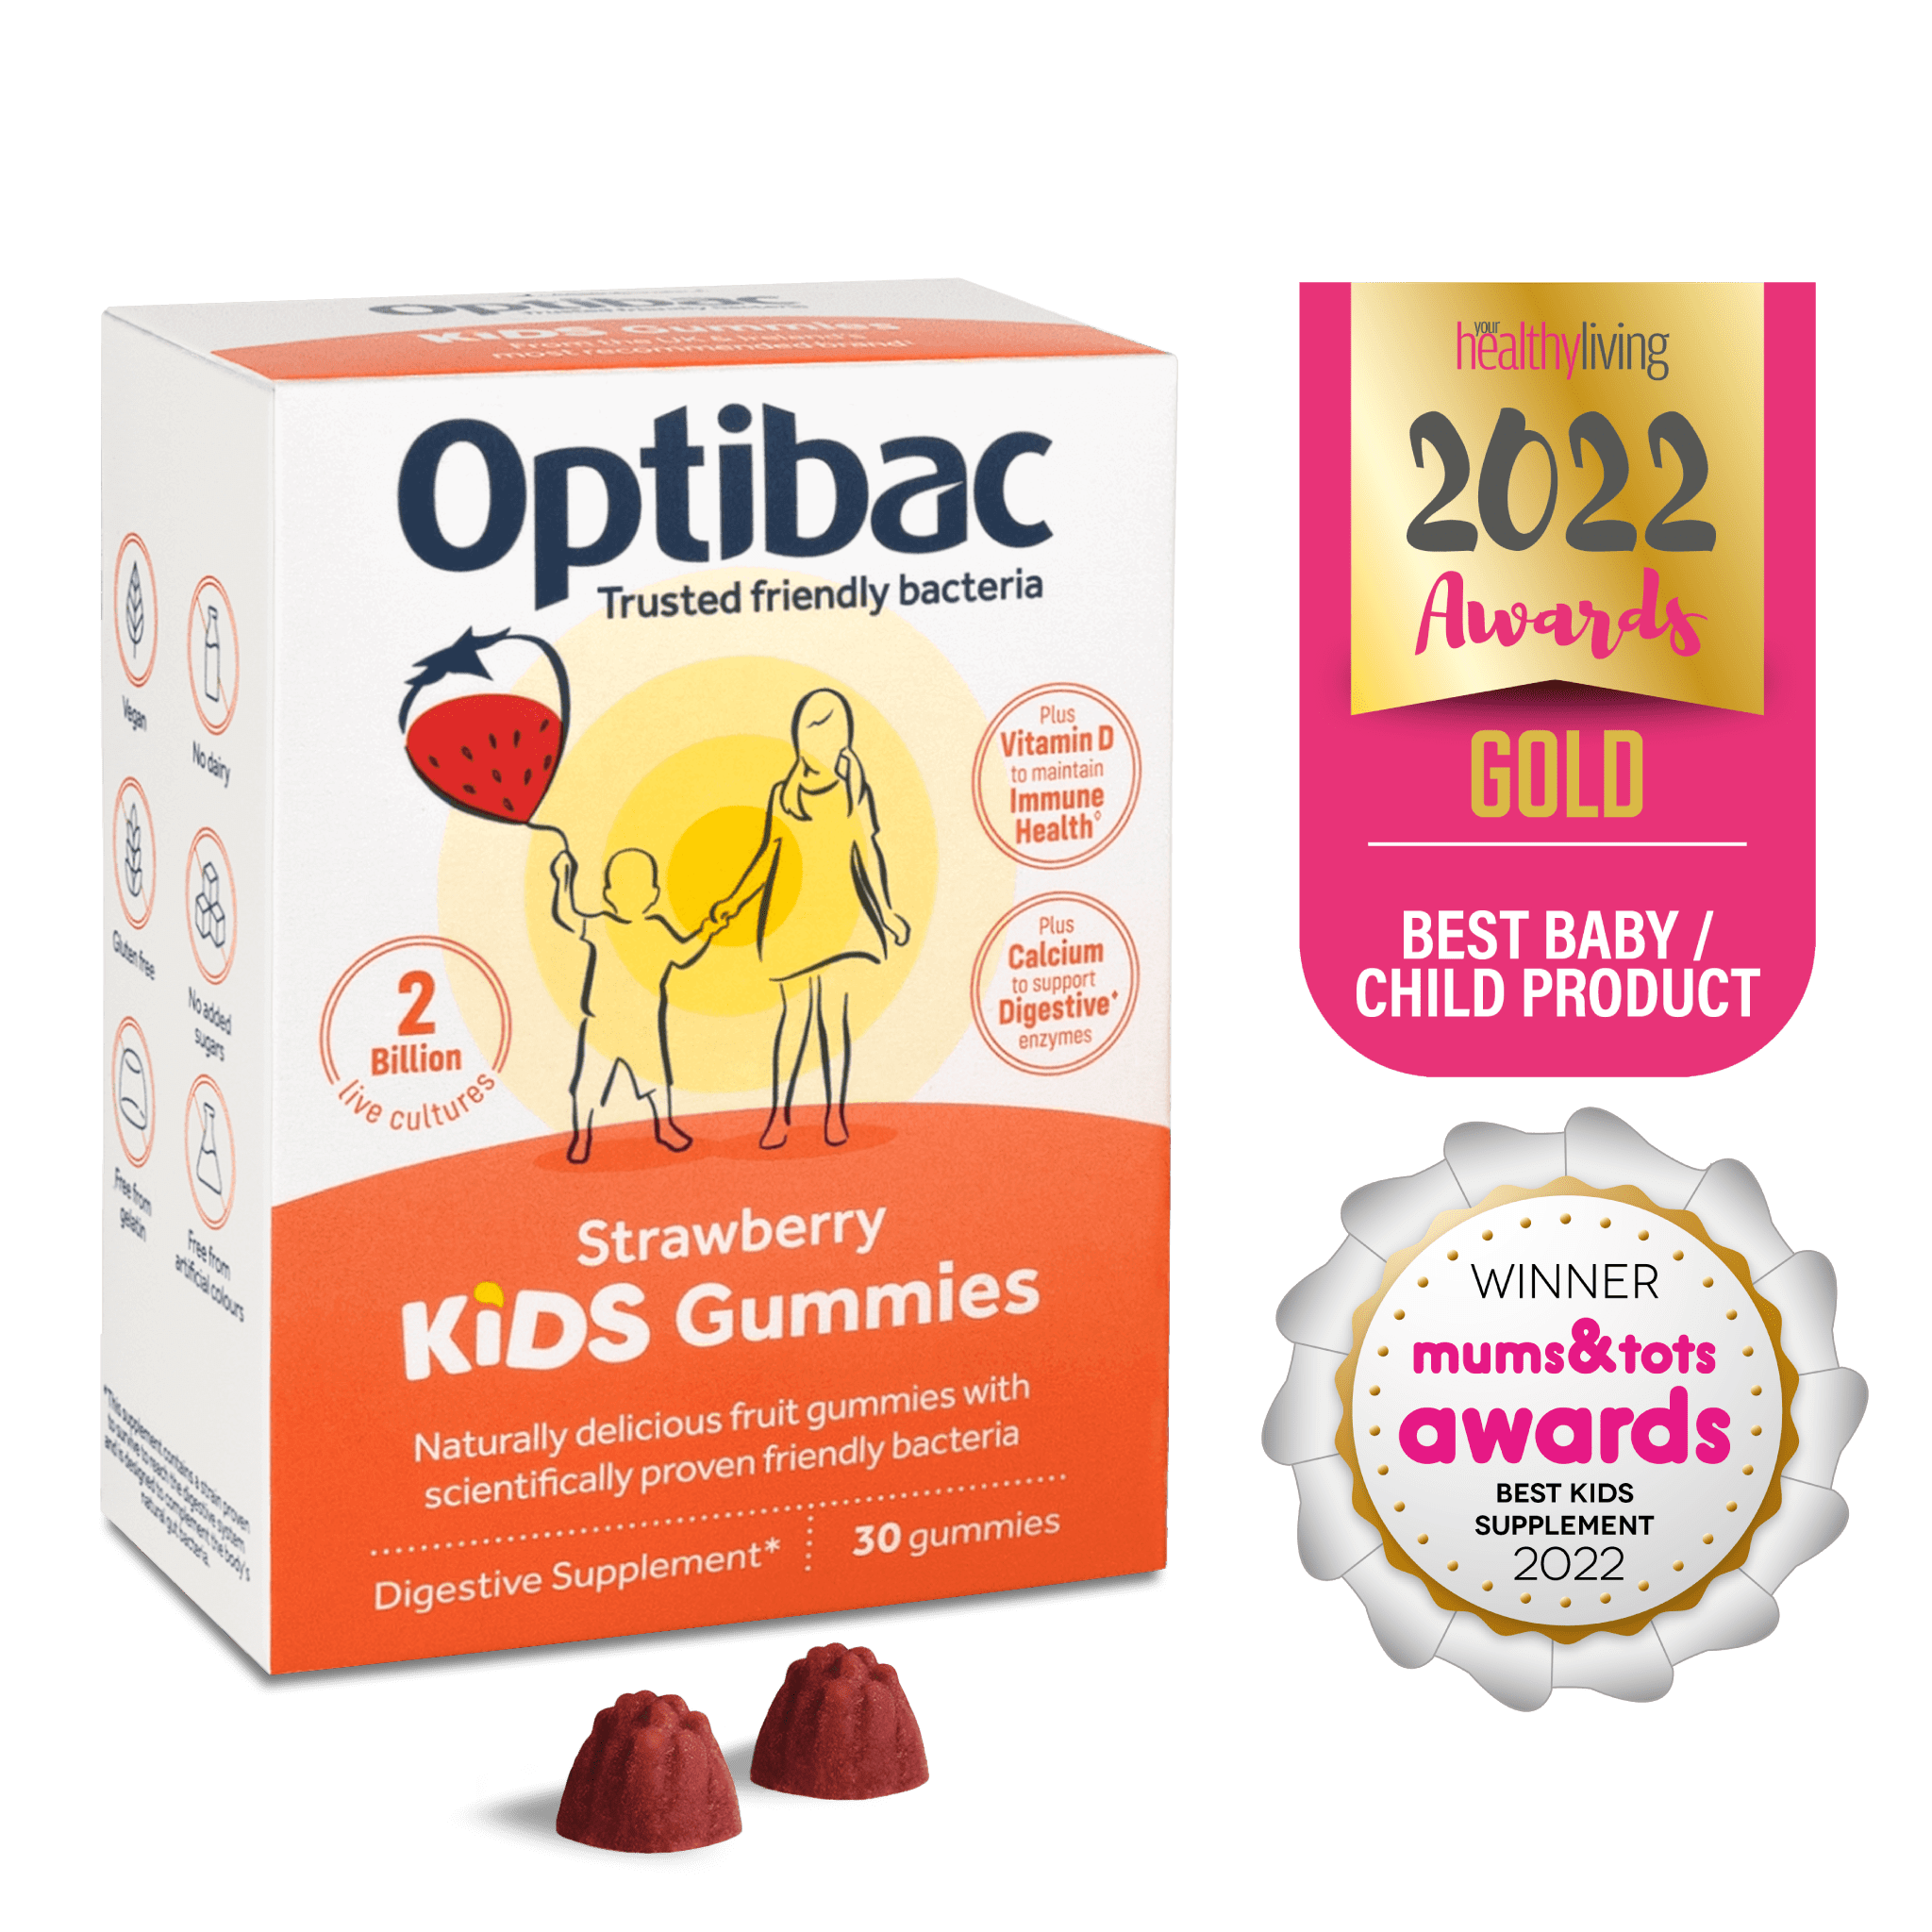 Optibac Probiotics Kids Gummies won a gold award